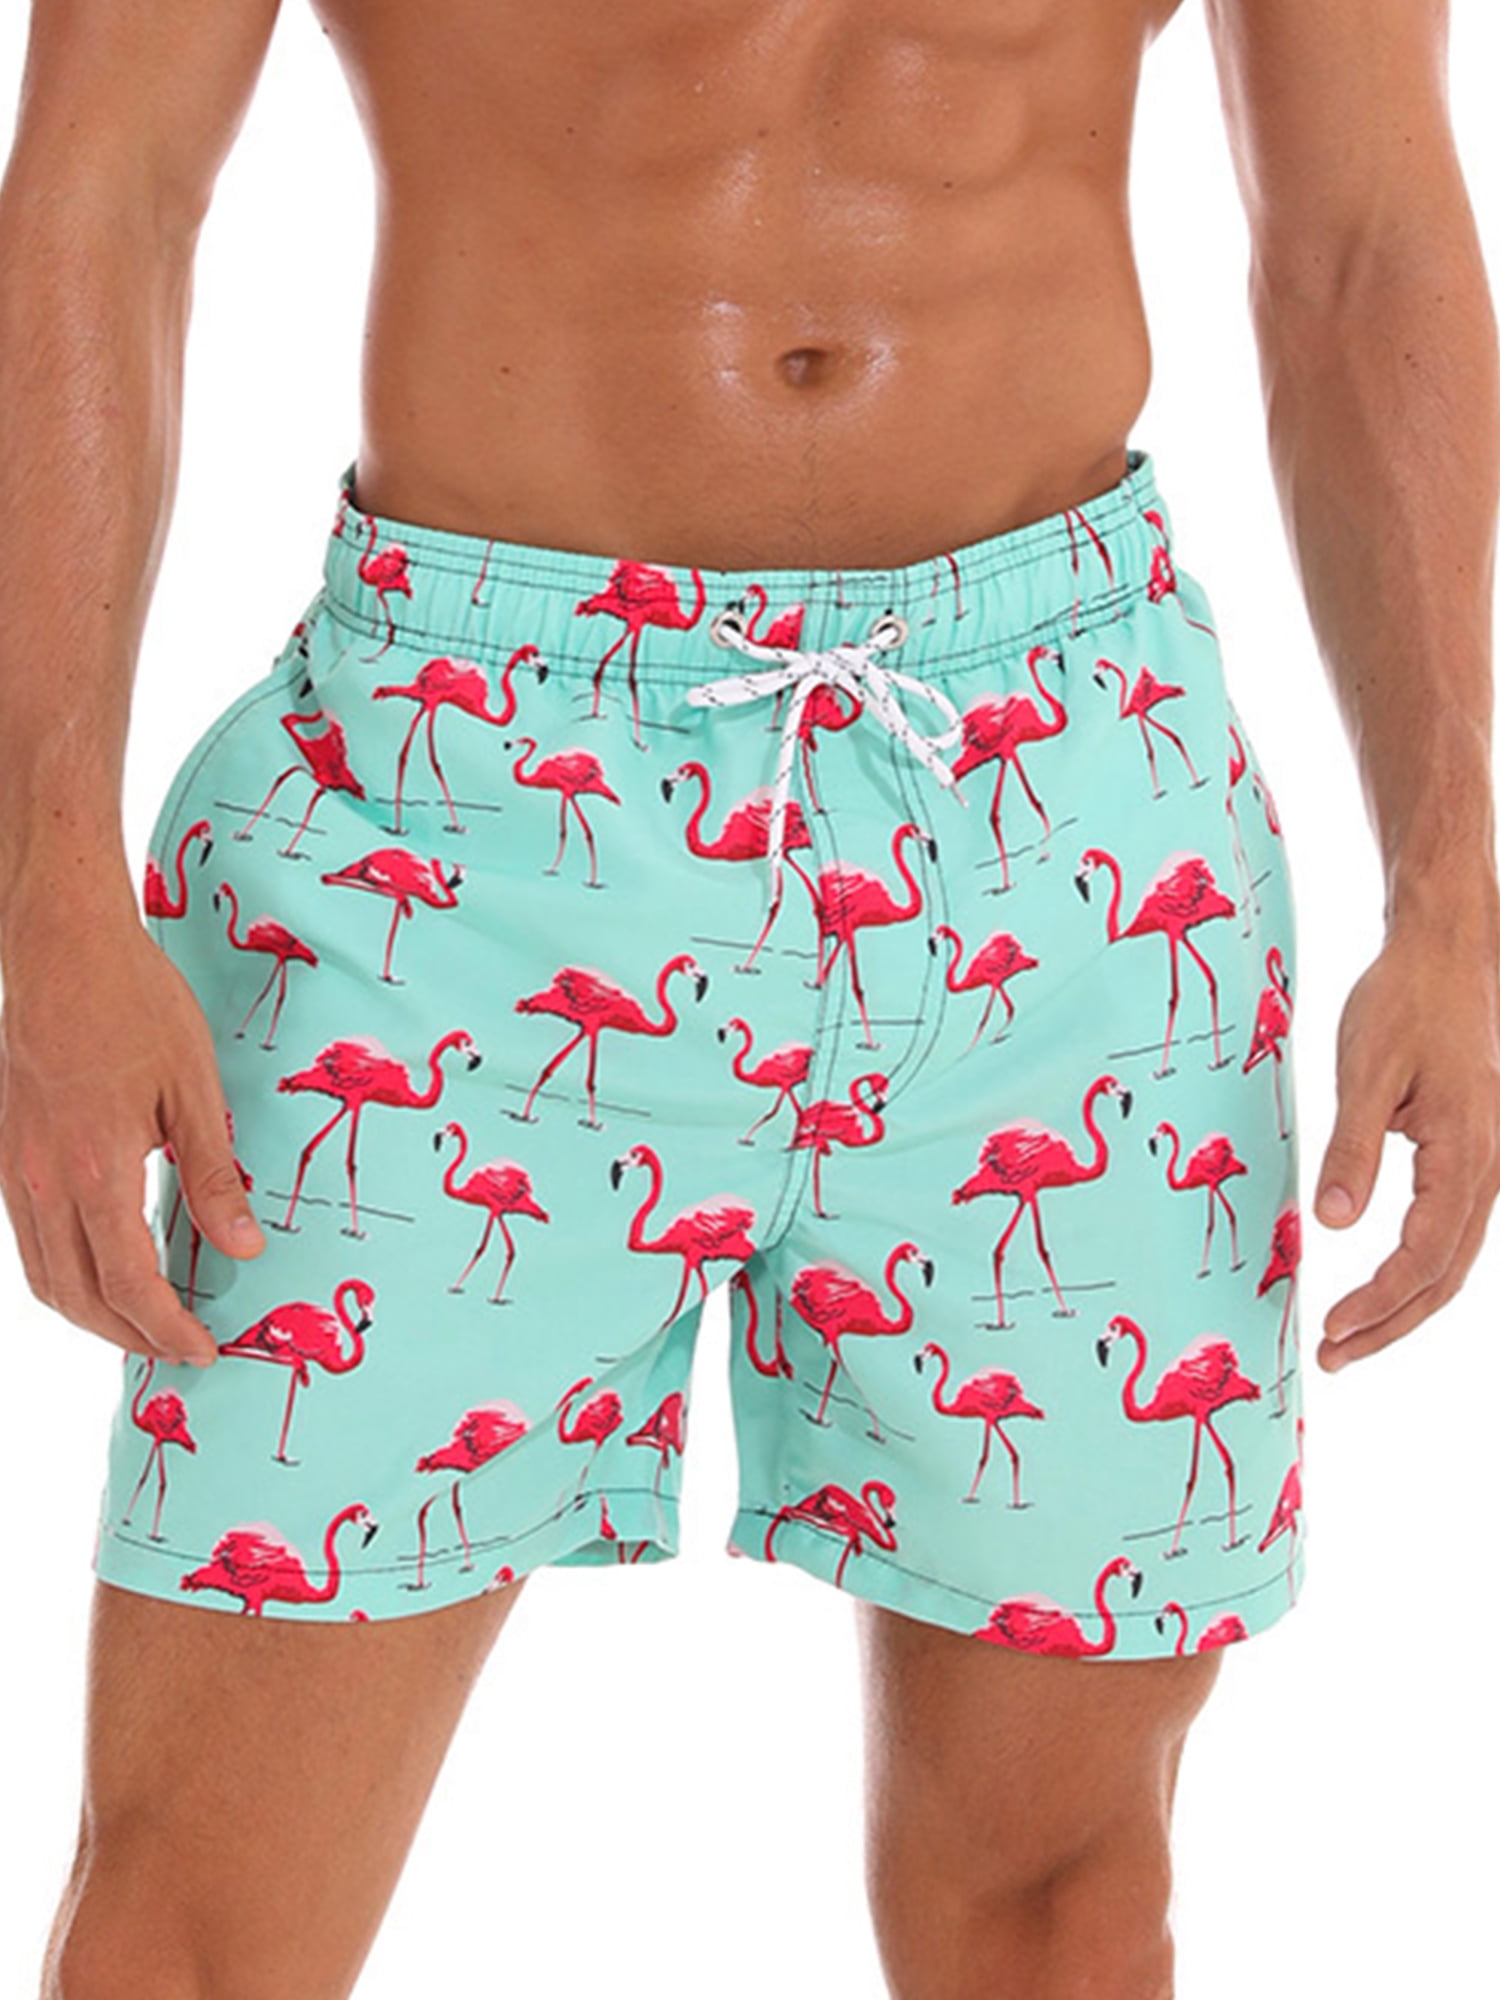 Boys Casual Swim Trunks Quick Dry Beach Board Shorts Swimwear Pants with Pocket